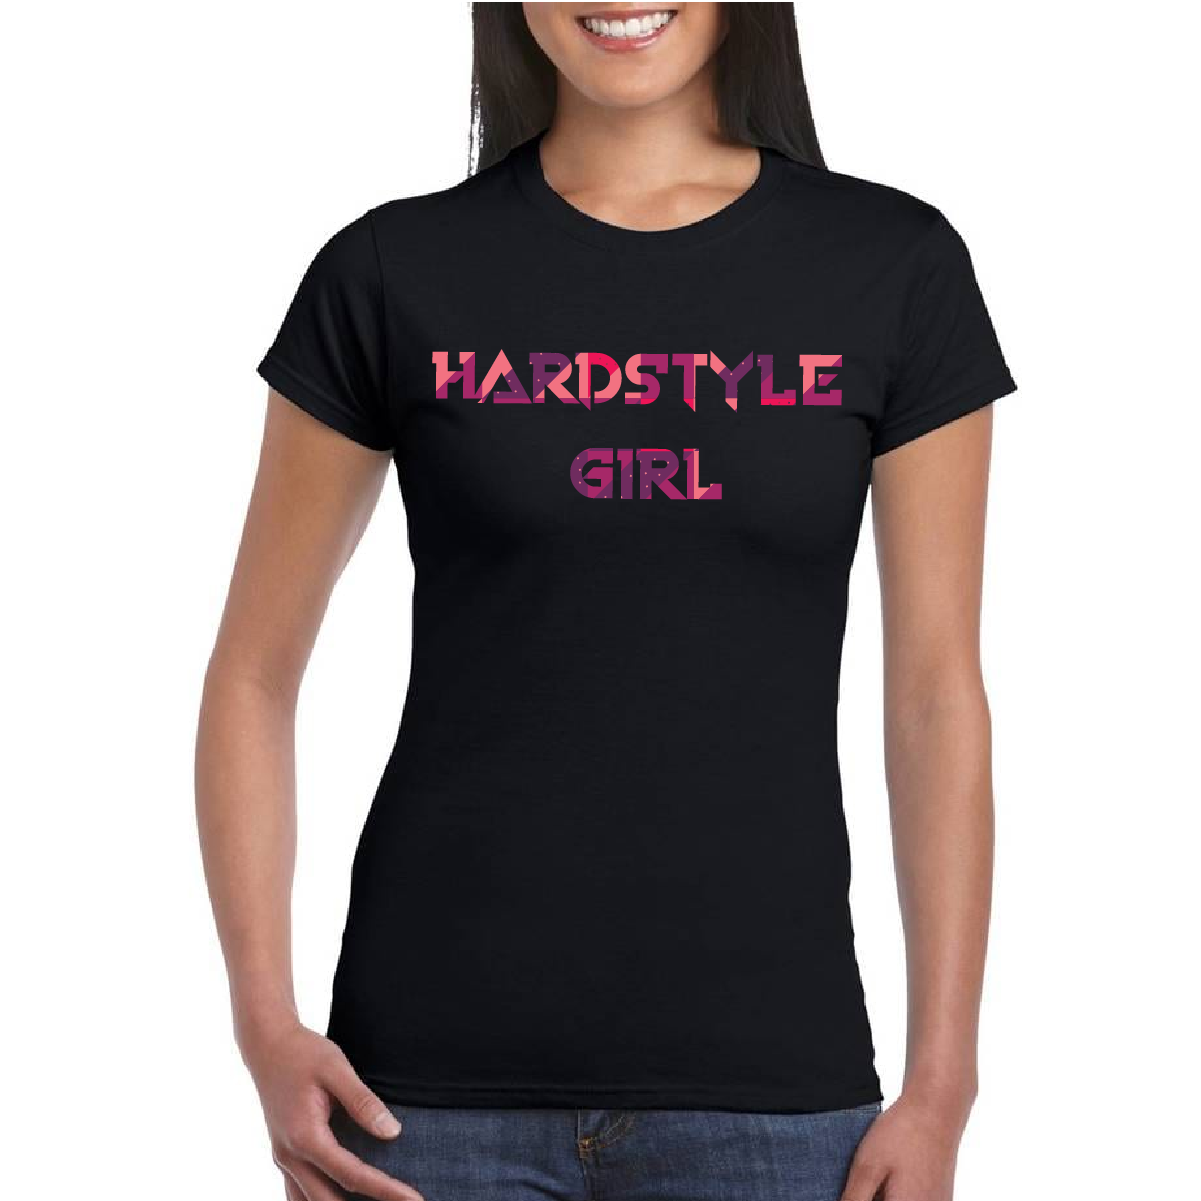 Hardstyle girl shirt – XXL